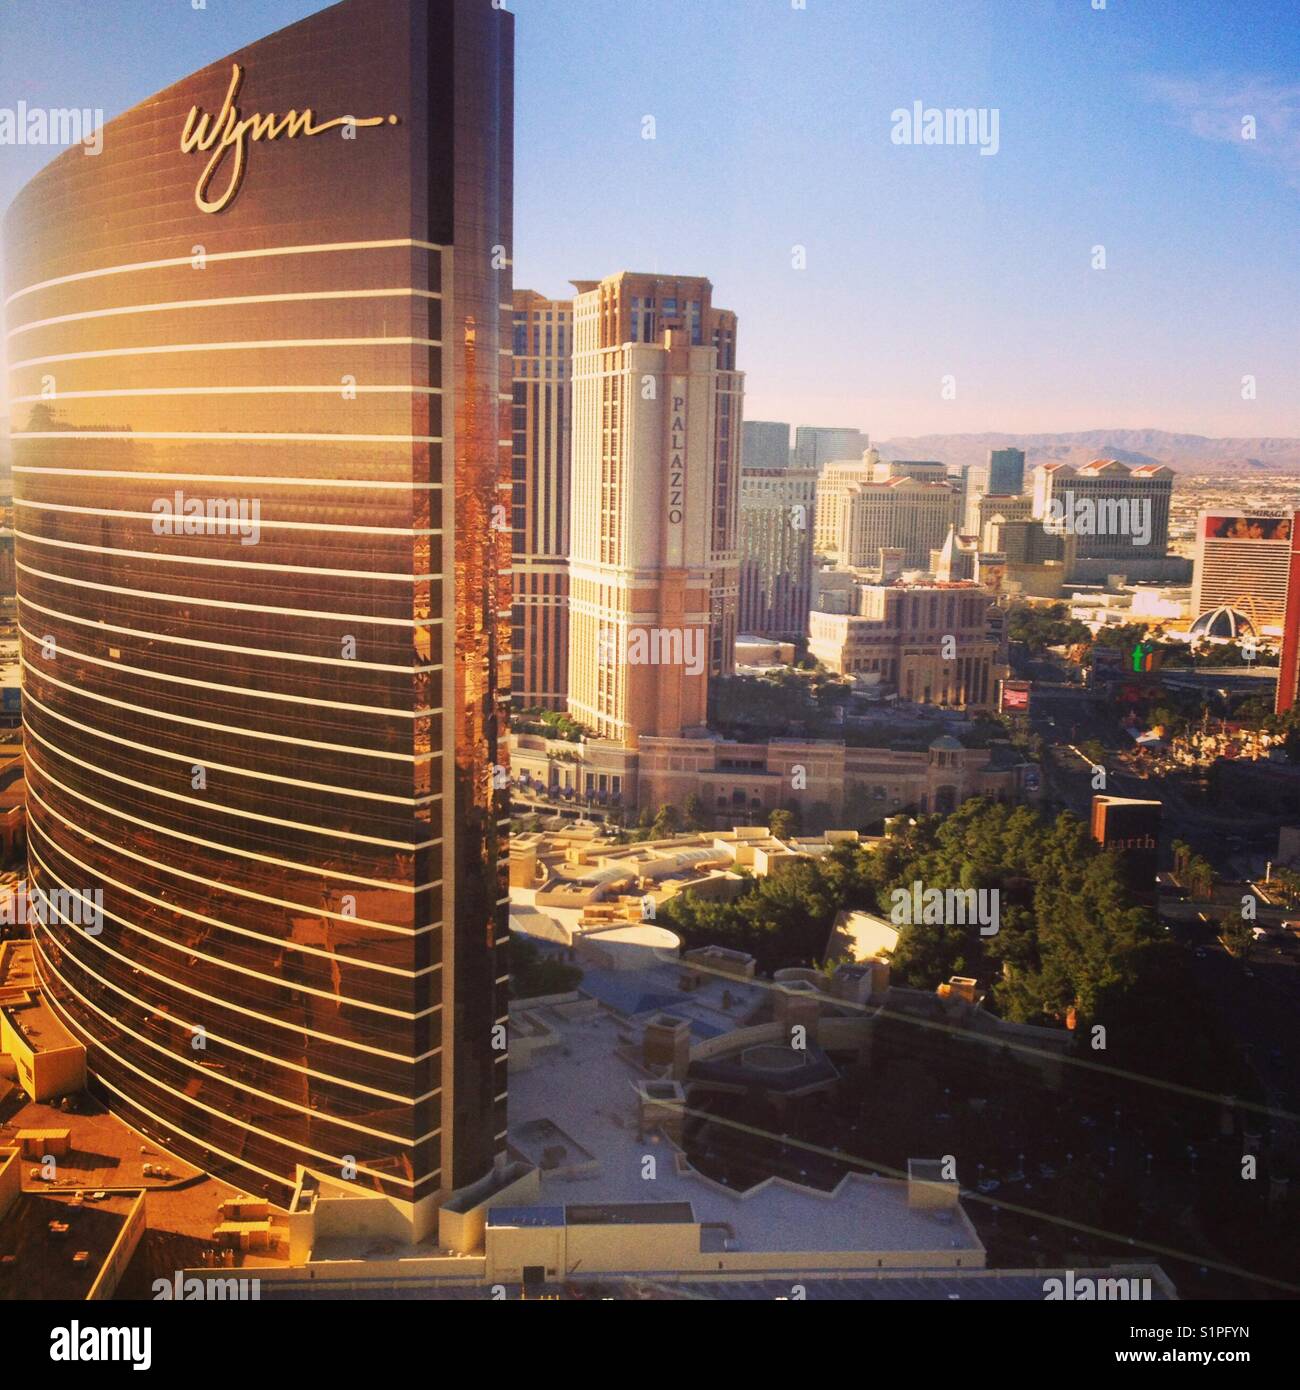 Wynn Hotel, Las Vegas Stock Photo